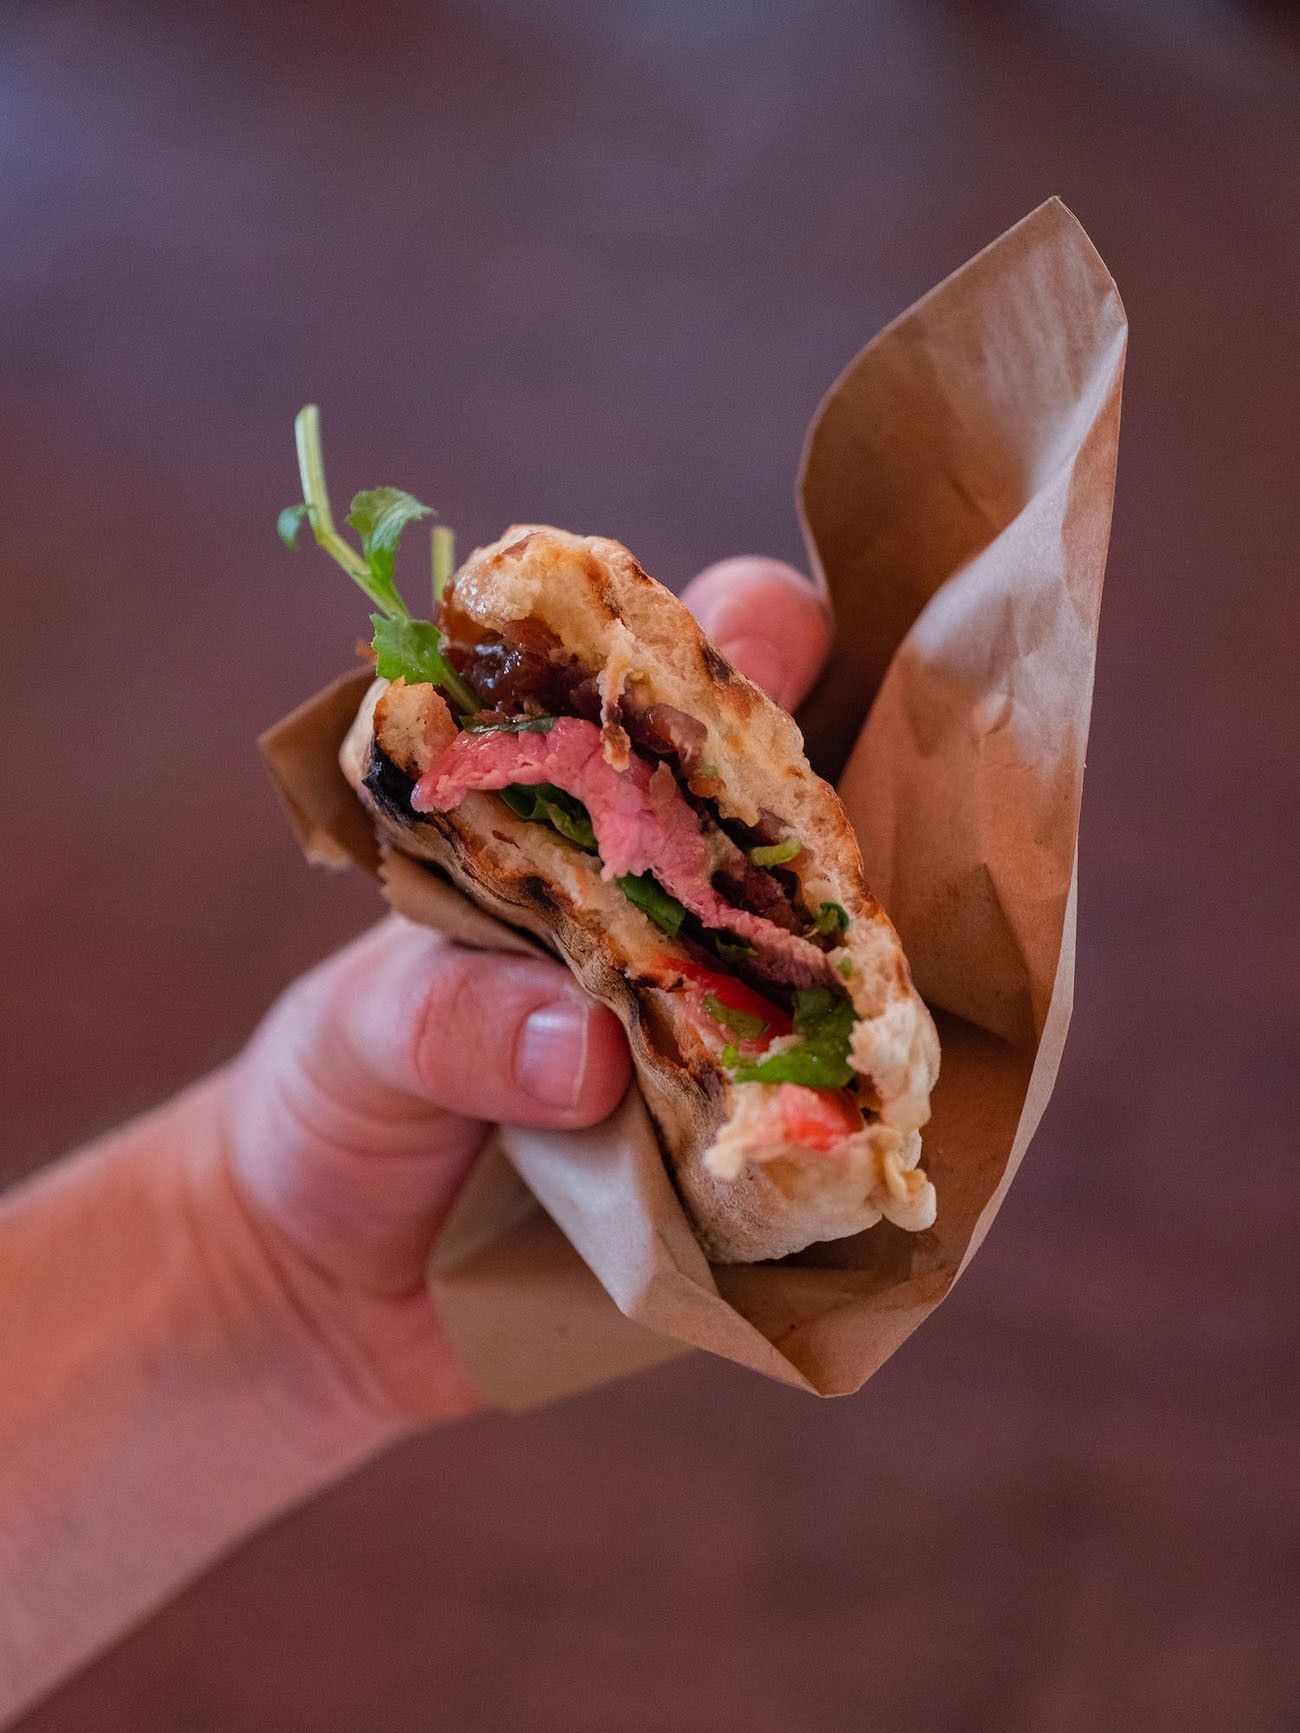 Frühstücks - und Brunch Guide für Kapstadt, Old Biscuit Mill, Neighborgoods Market, Steak Sandwich